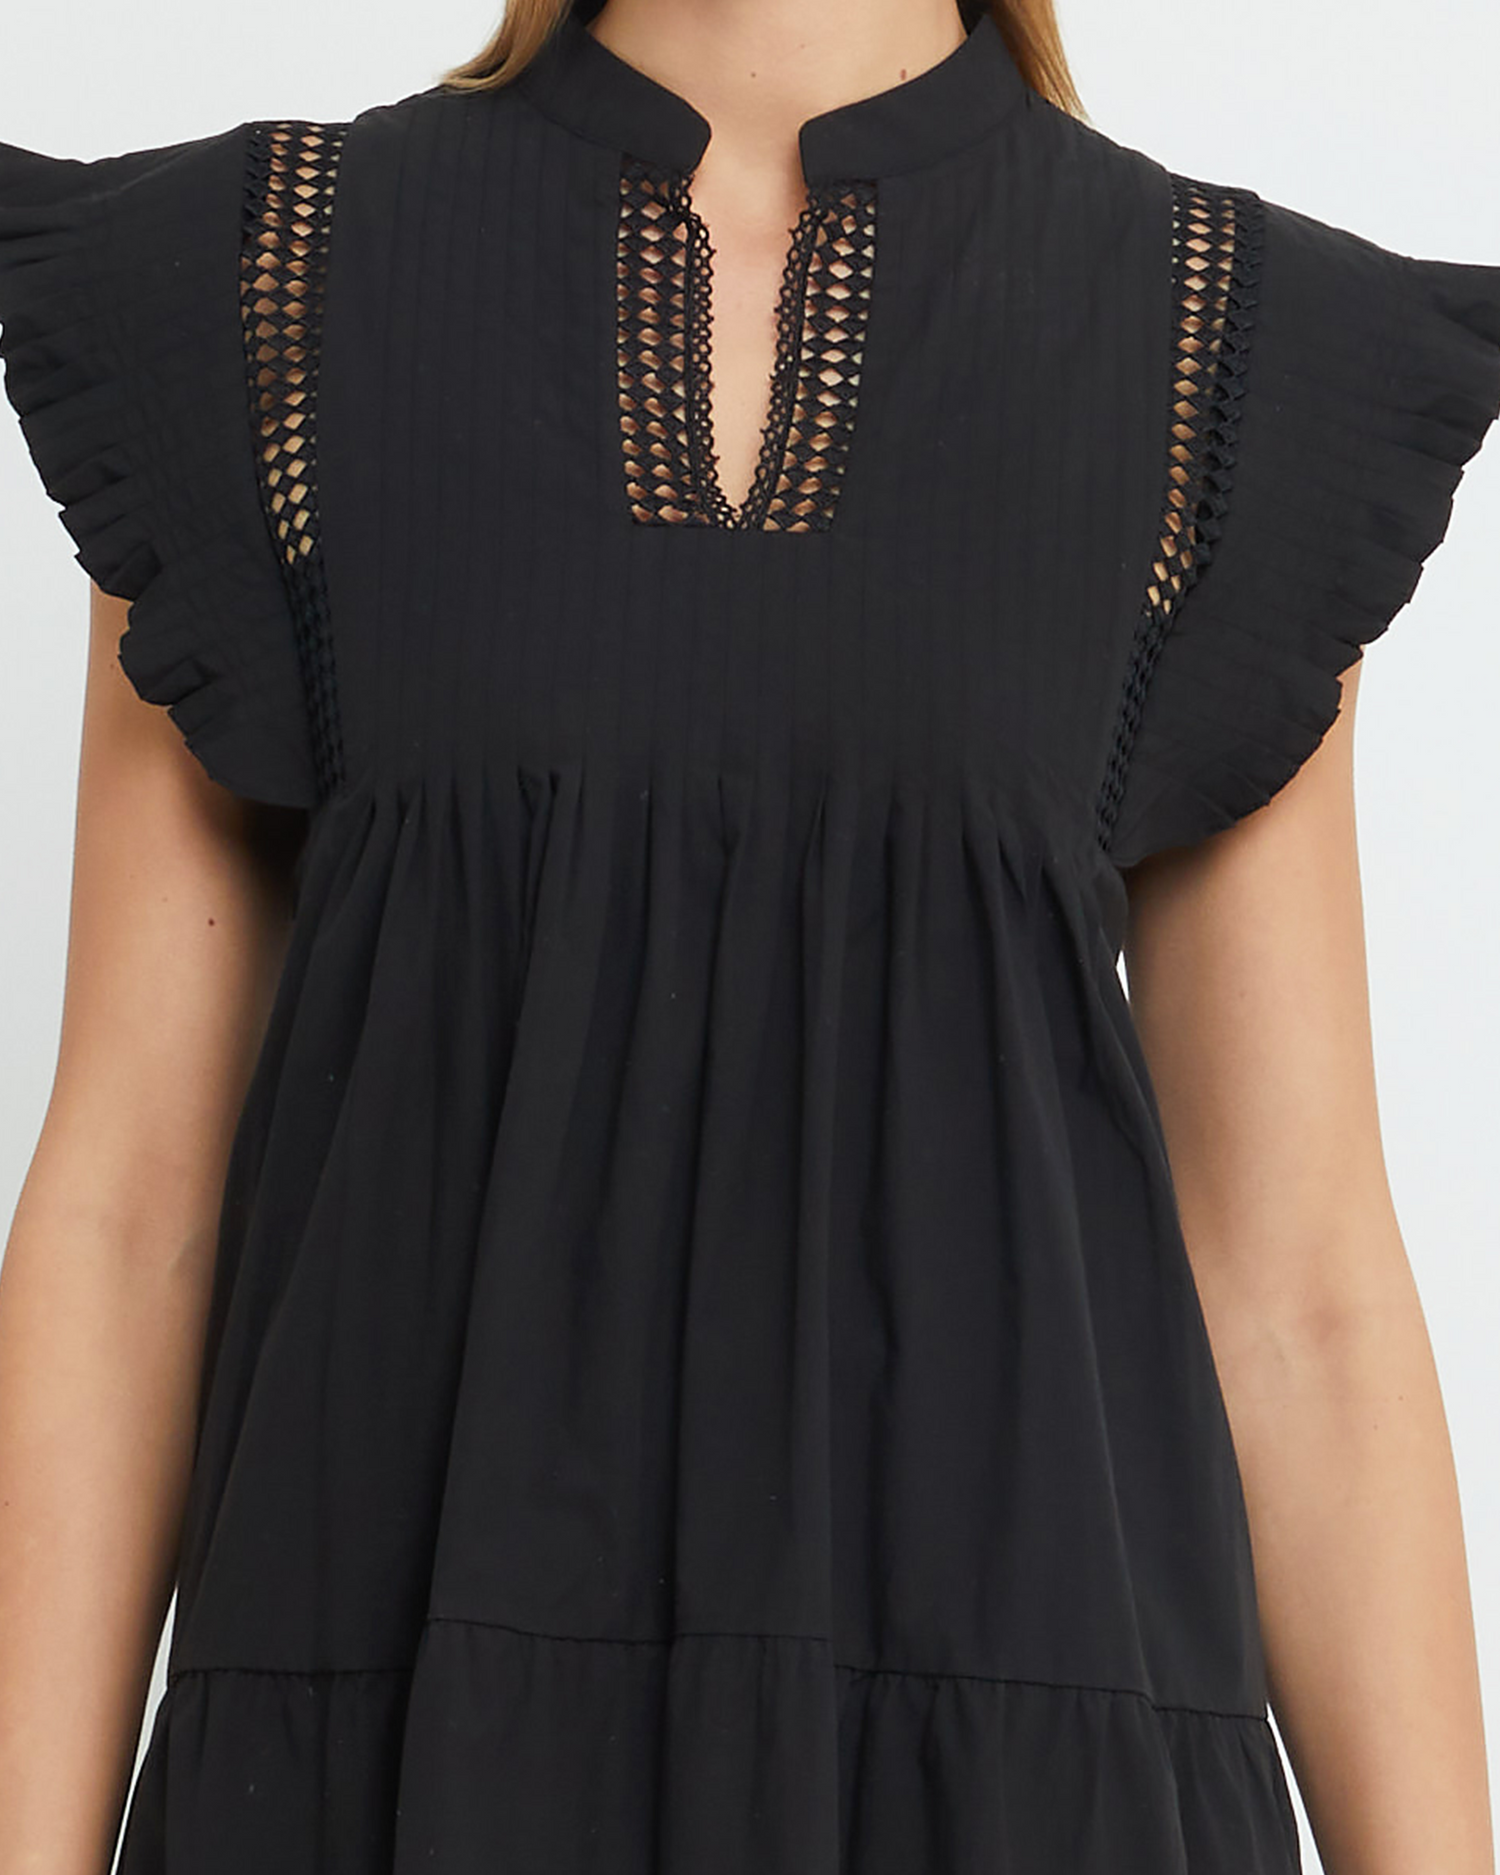 Sixth image of Callan Dress, a black mini dress, paneled, lace, ruffle sleeve, high neckline